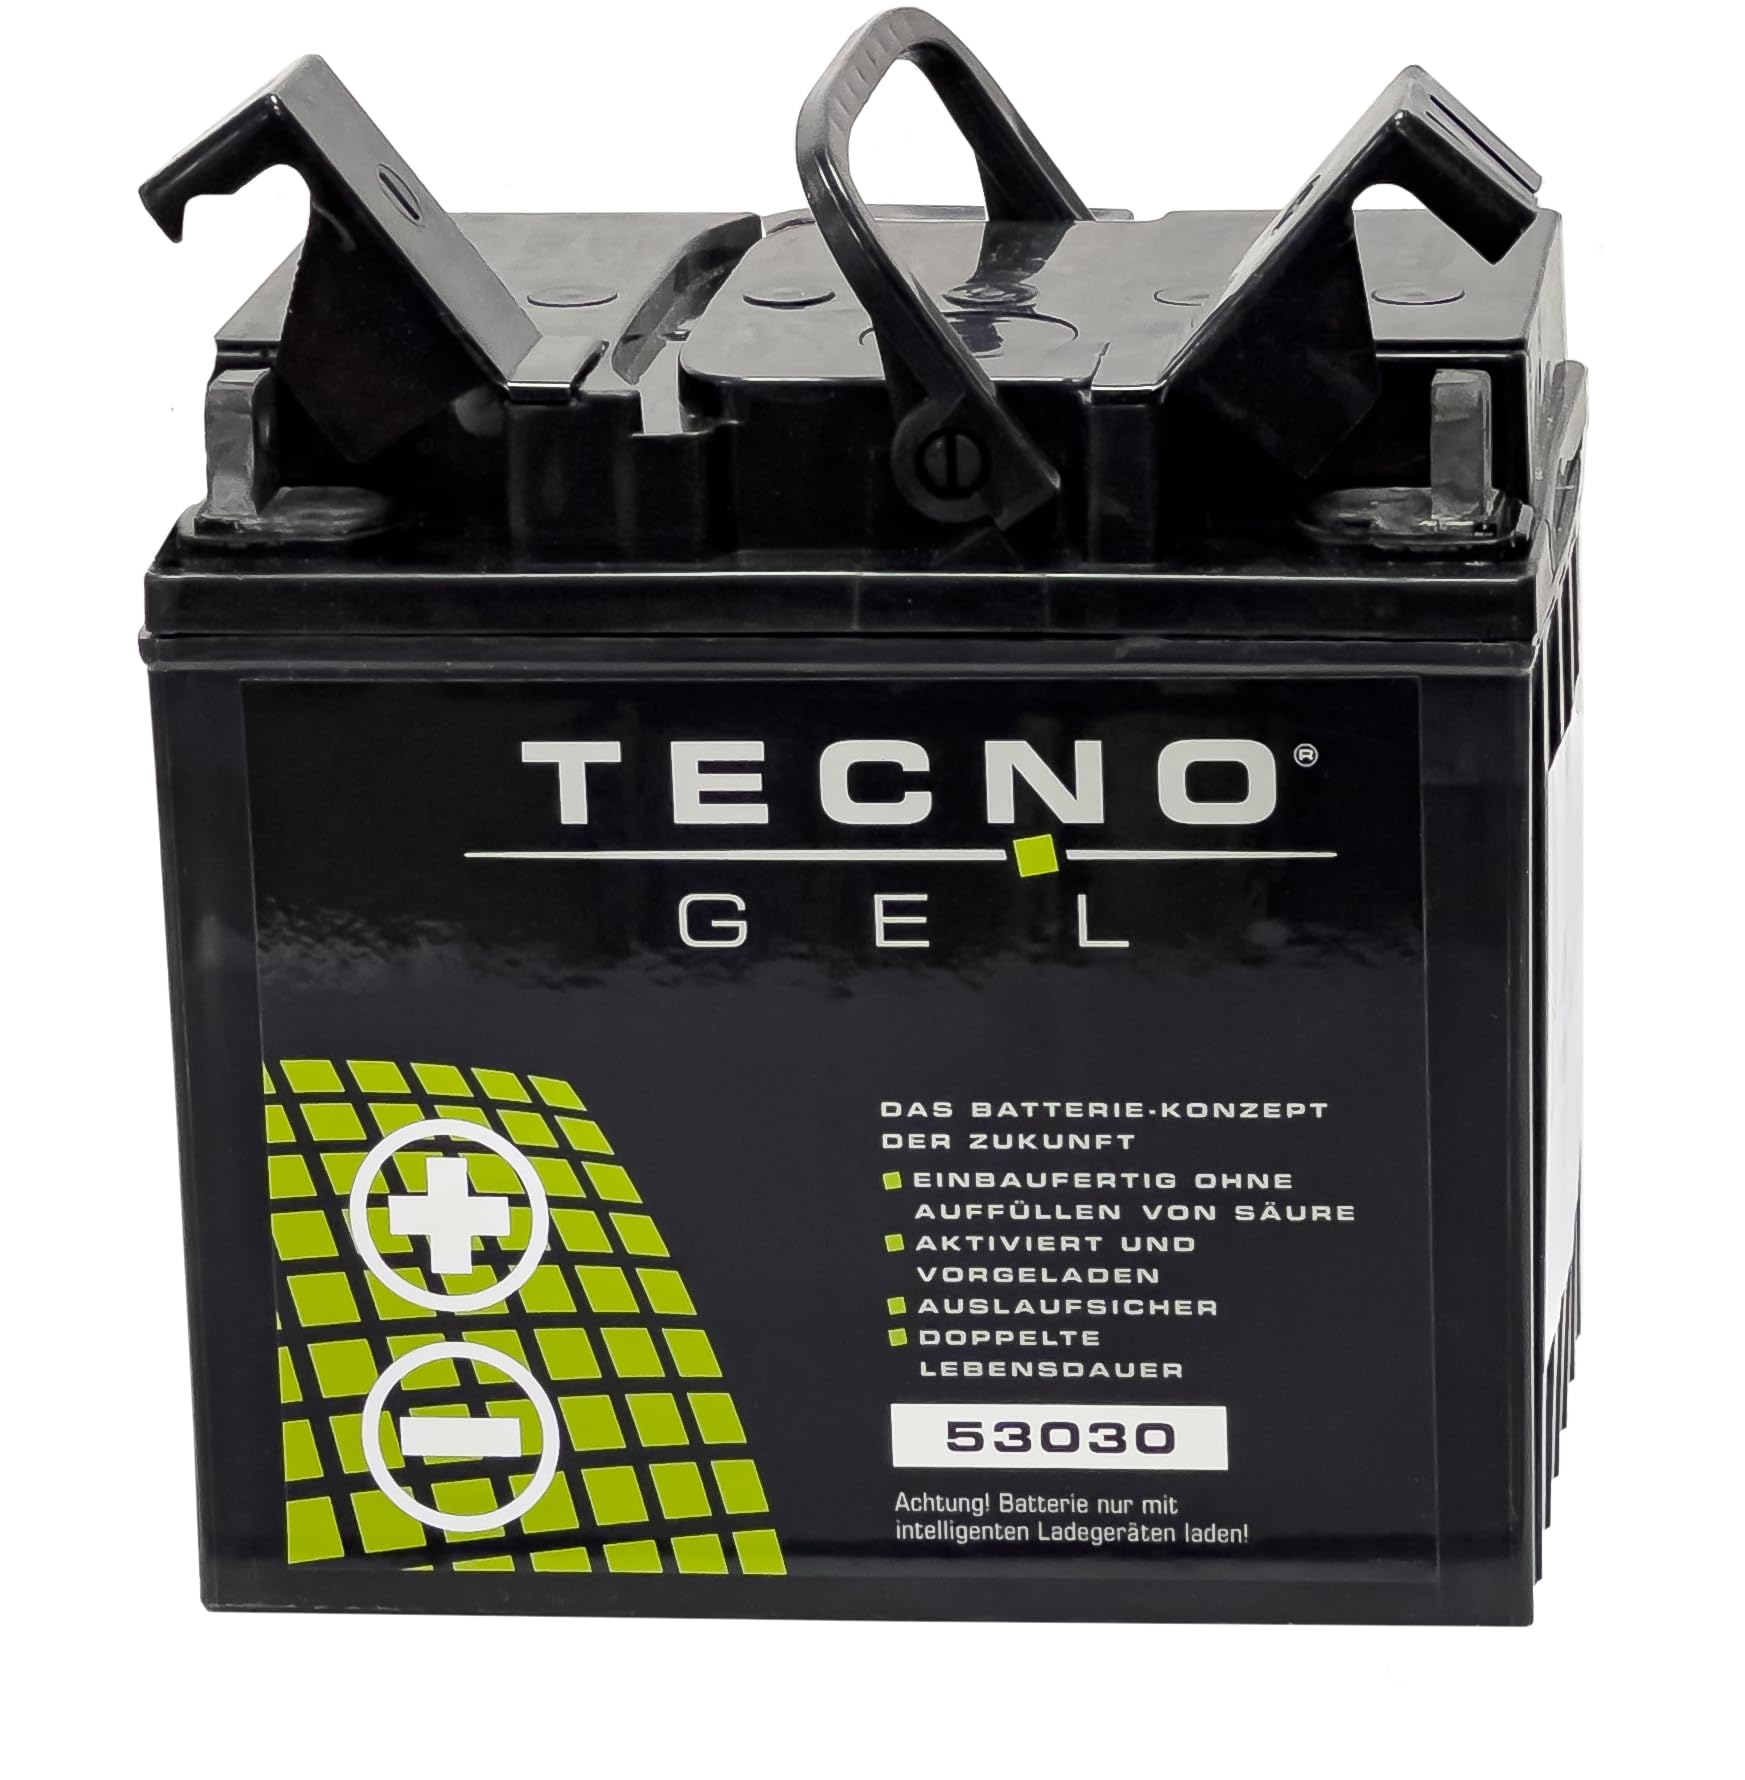 TECNO-GEL Motorrad Qualitäts Batterie 53030 für MOTO GUZZI V75 750 Strada, Targa 1991-1996, 12V Gel-Batterie 30Ah, 187x130x170 mm von Wirth-Federn